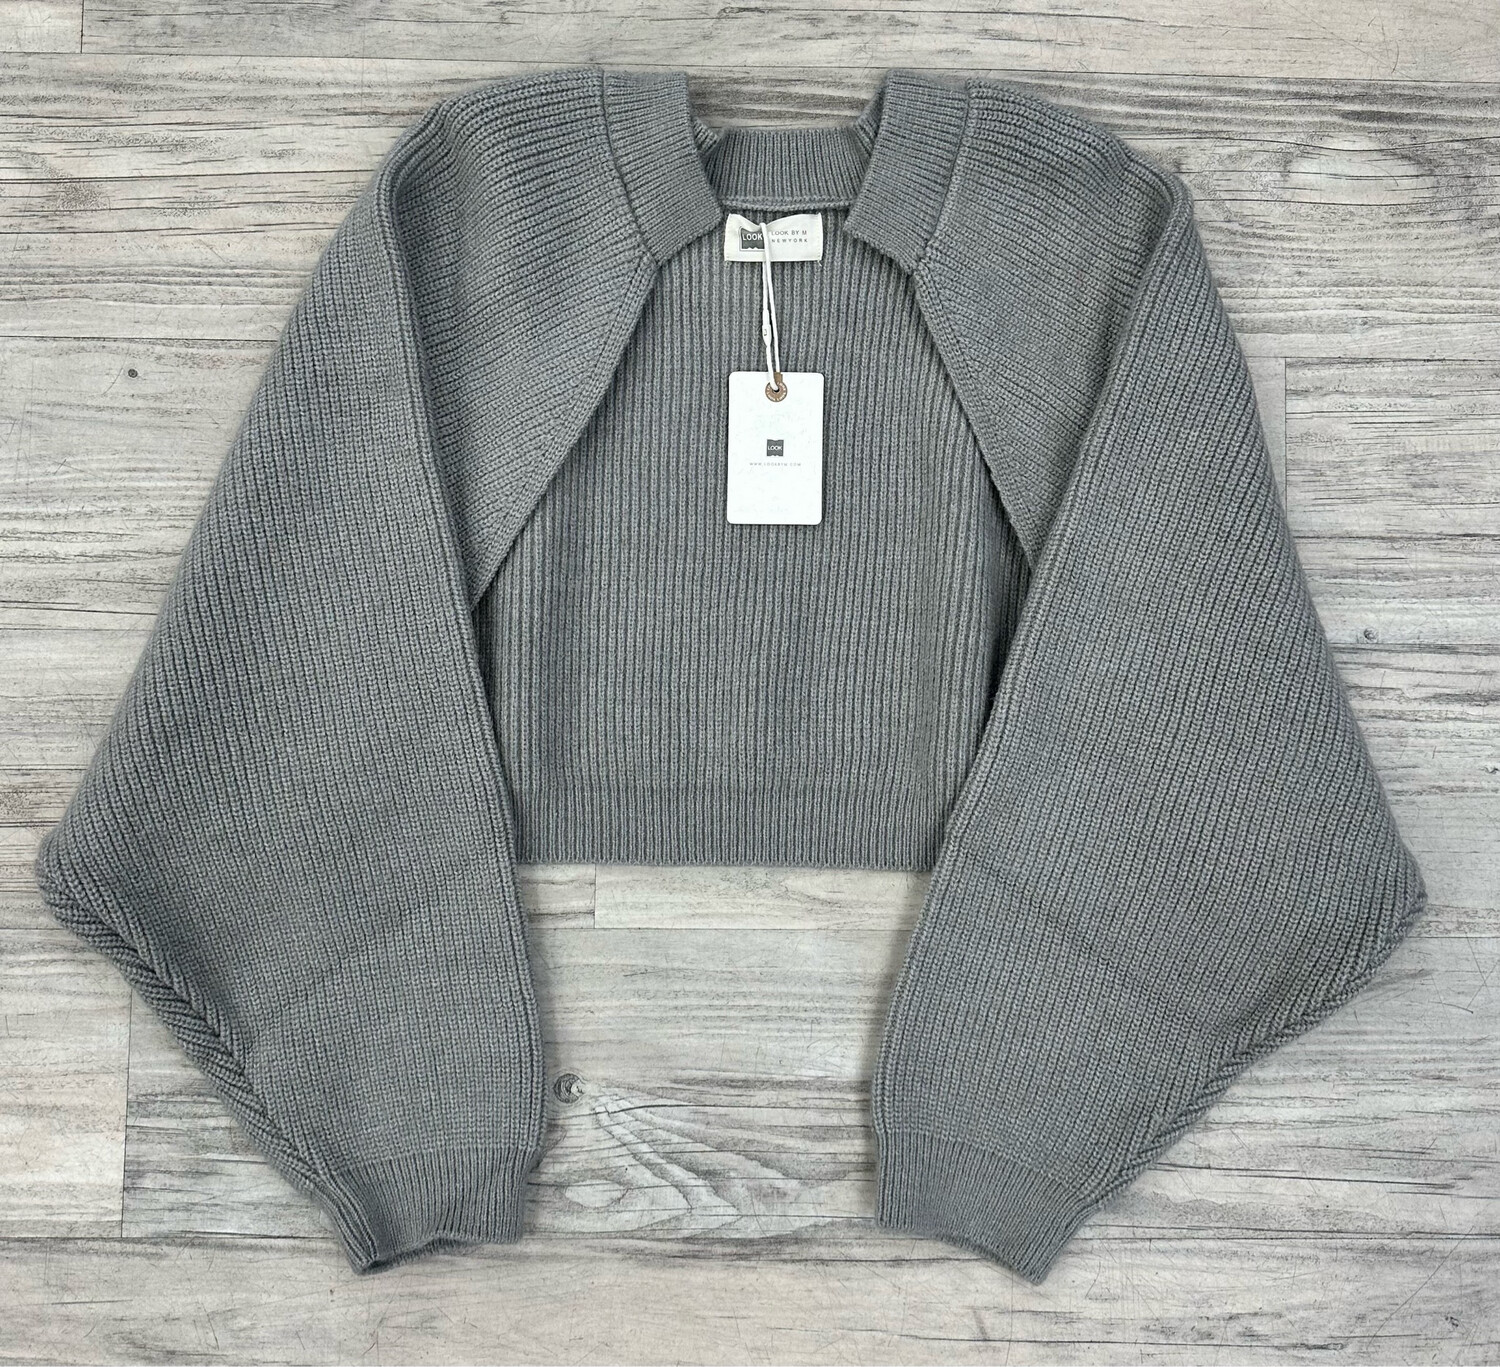 Bolero Sweater